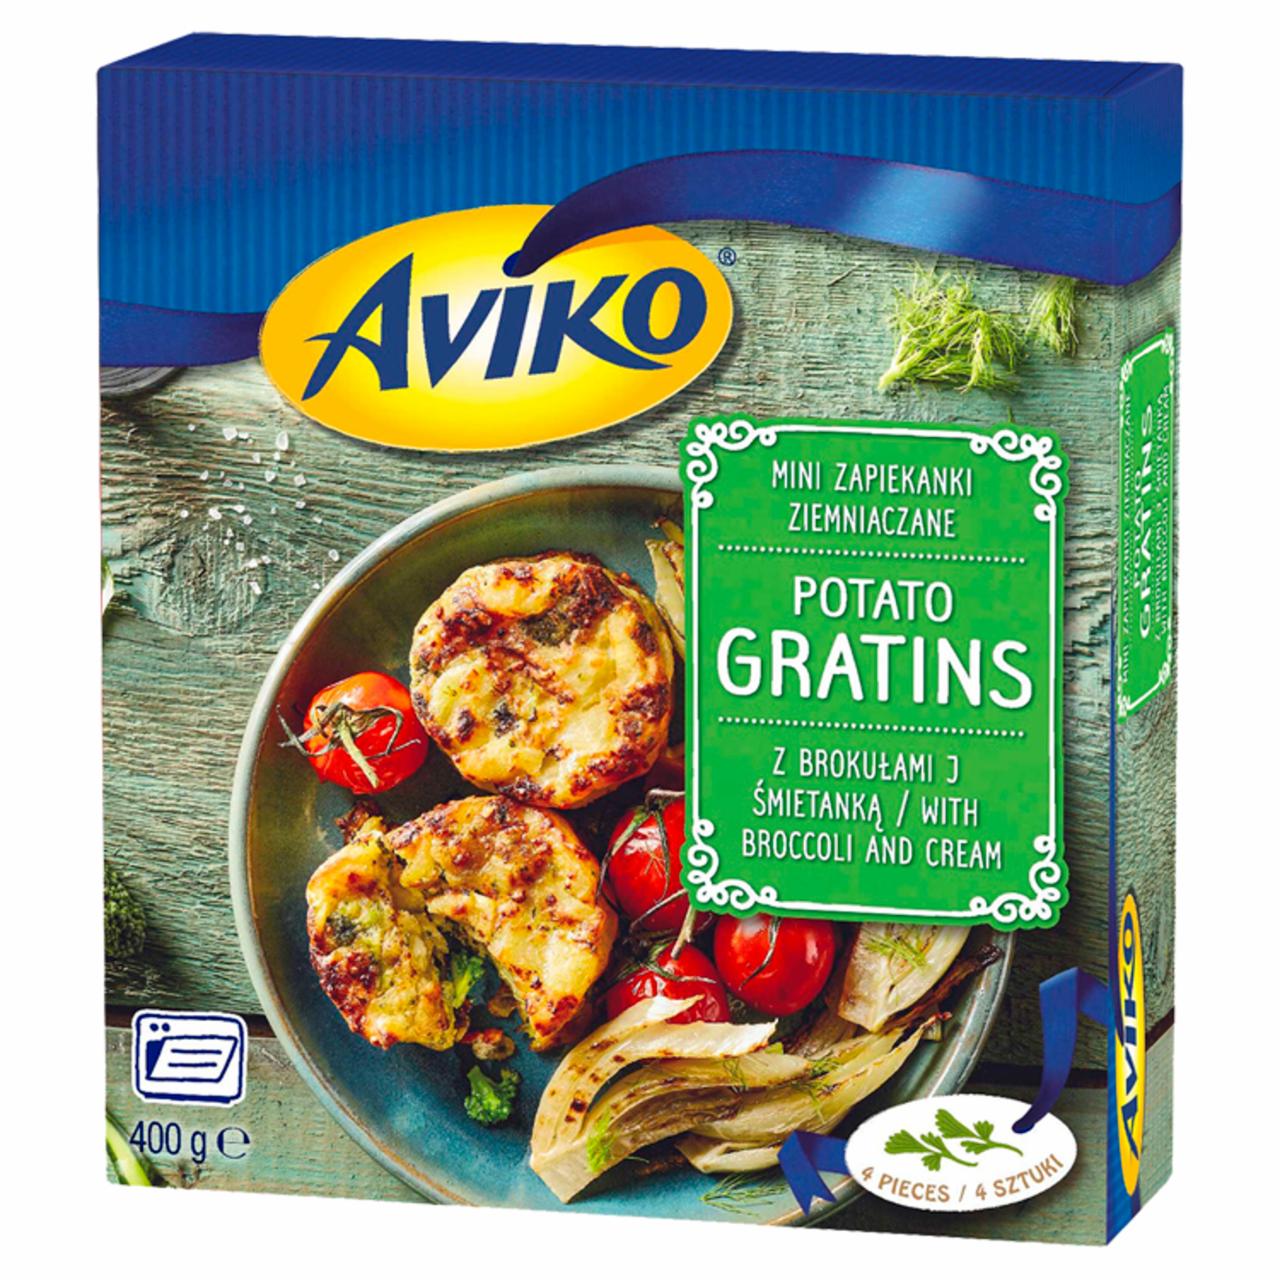 Фото - Potato Gratins with Broccoli and Cream Aviko